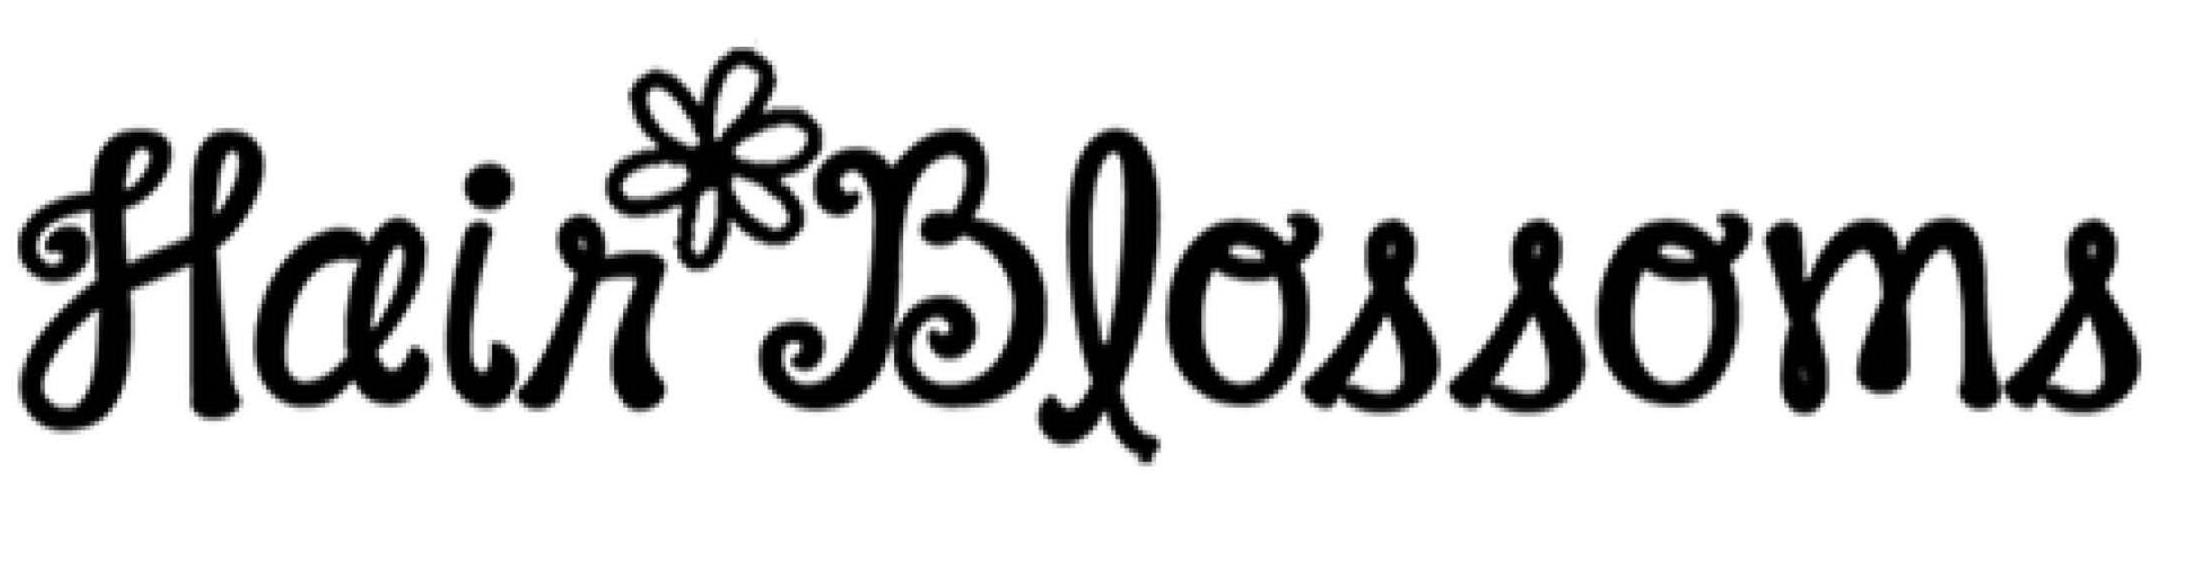 Trademark Logo HAIR BLOSSOMS